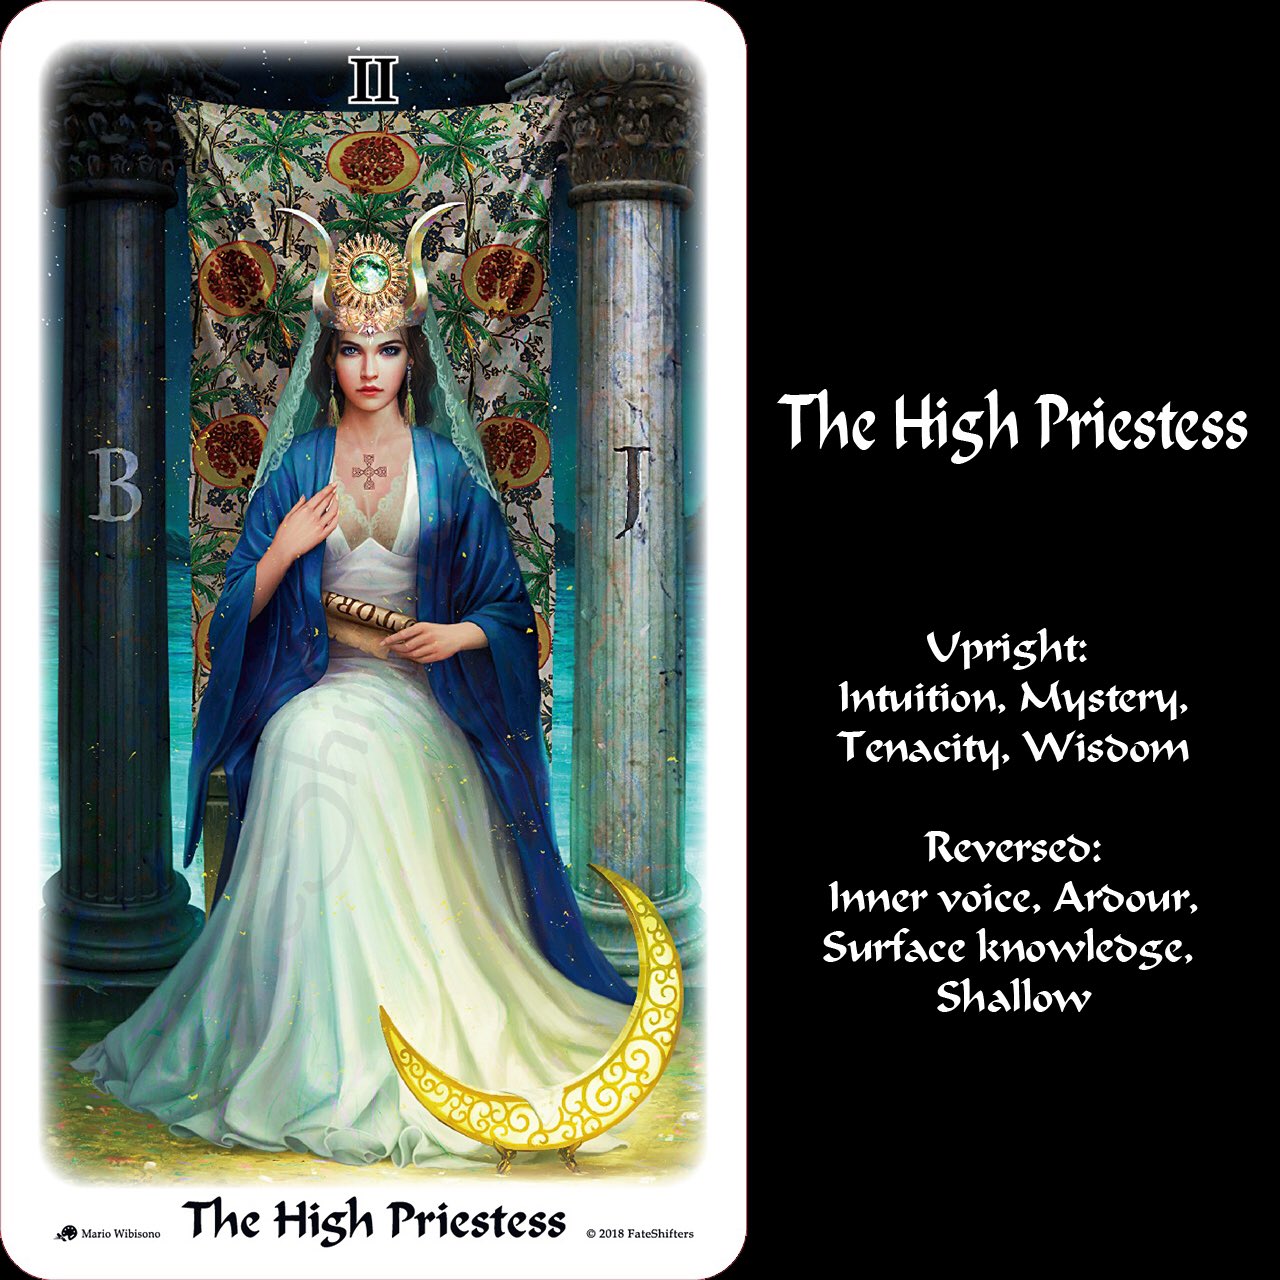 Saturday Morning Tarot 02 The High Priestess by kevinbolk on